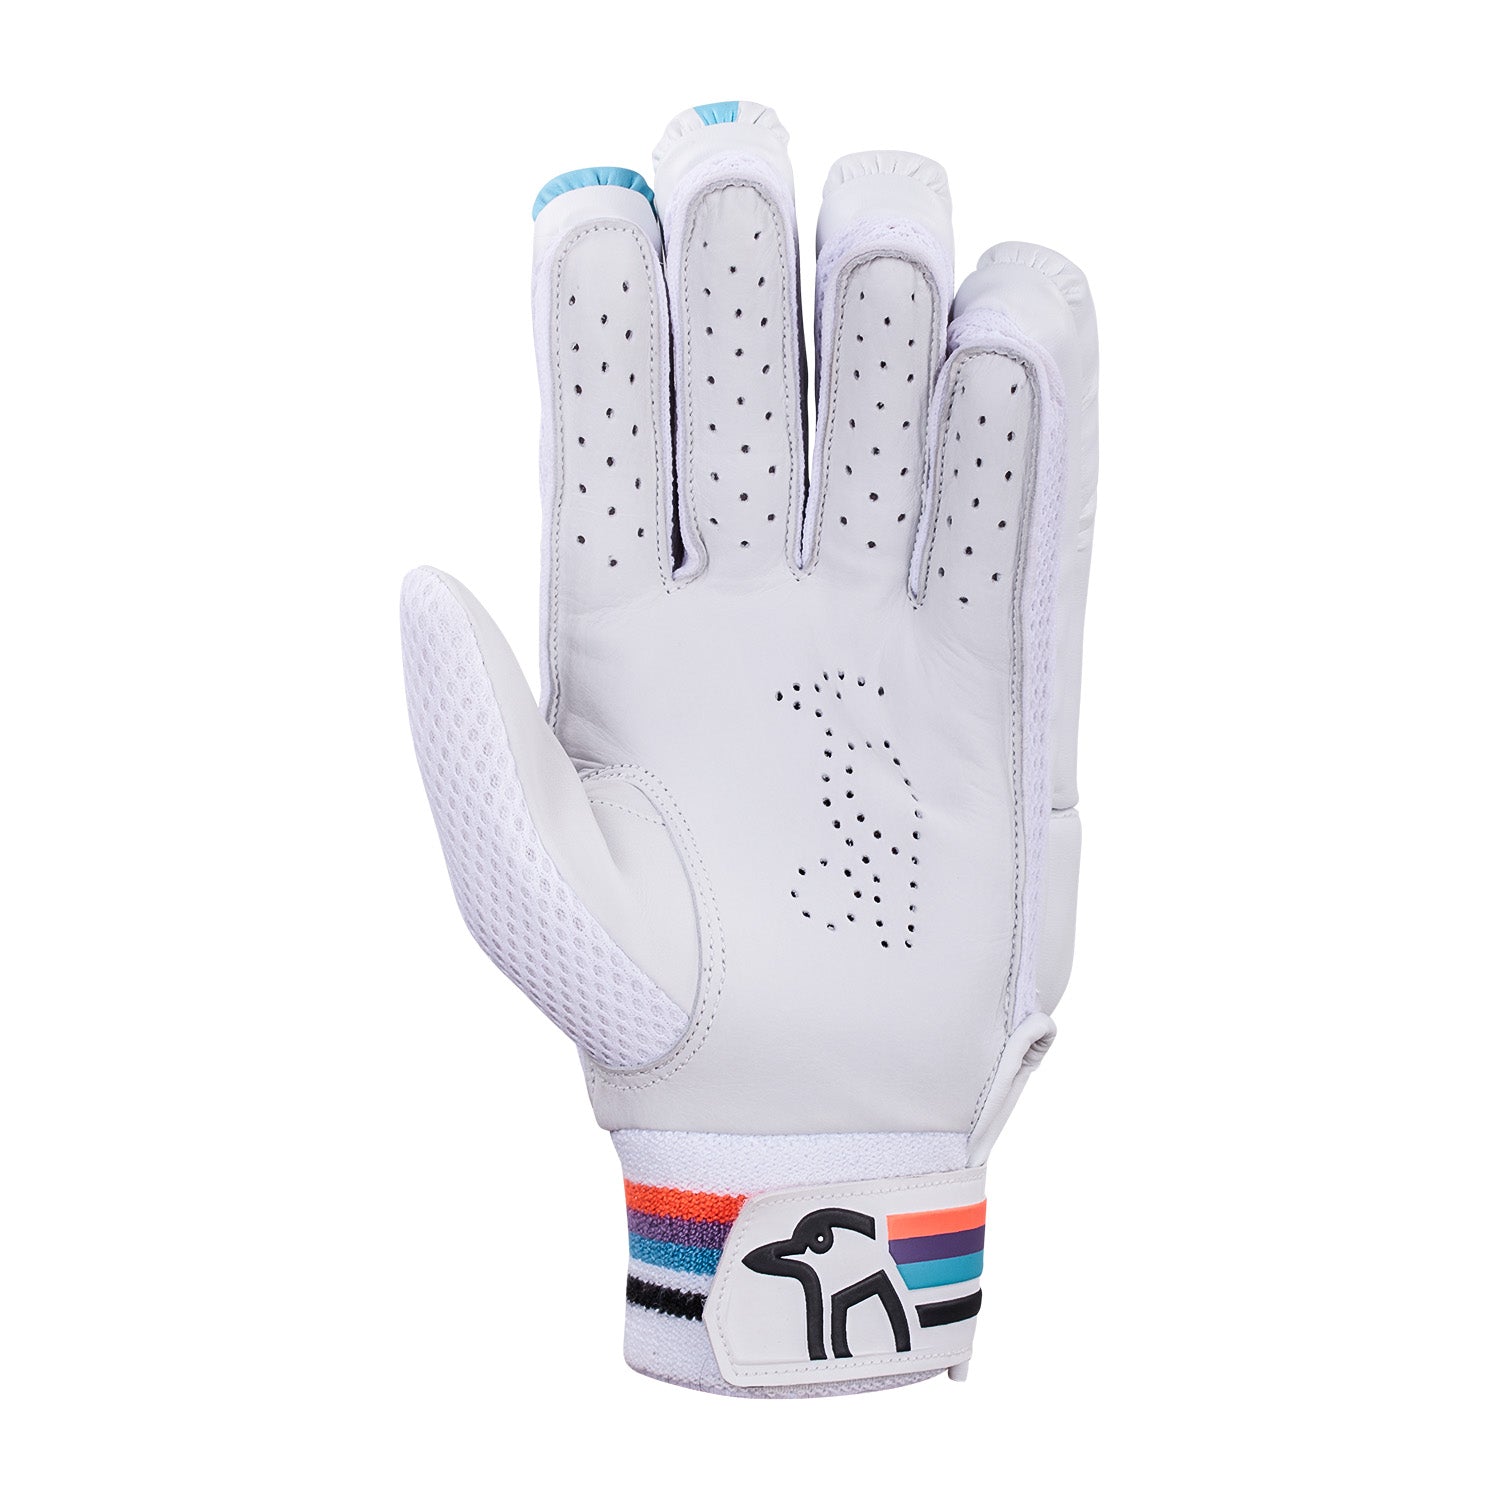 Kookaburra Aura 4.1 Batting Gloves